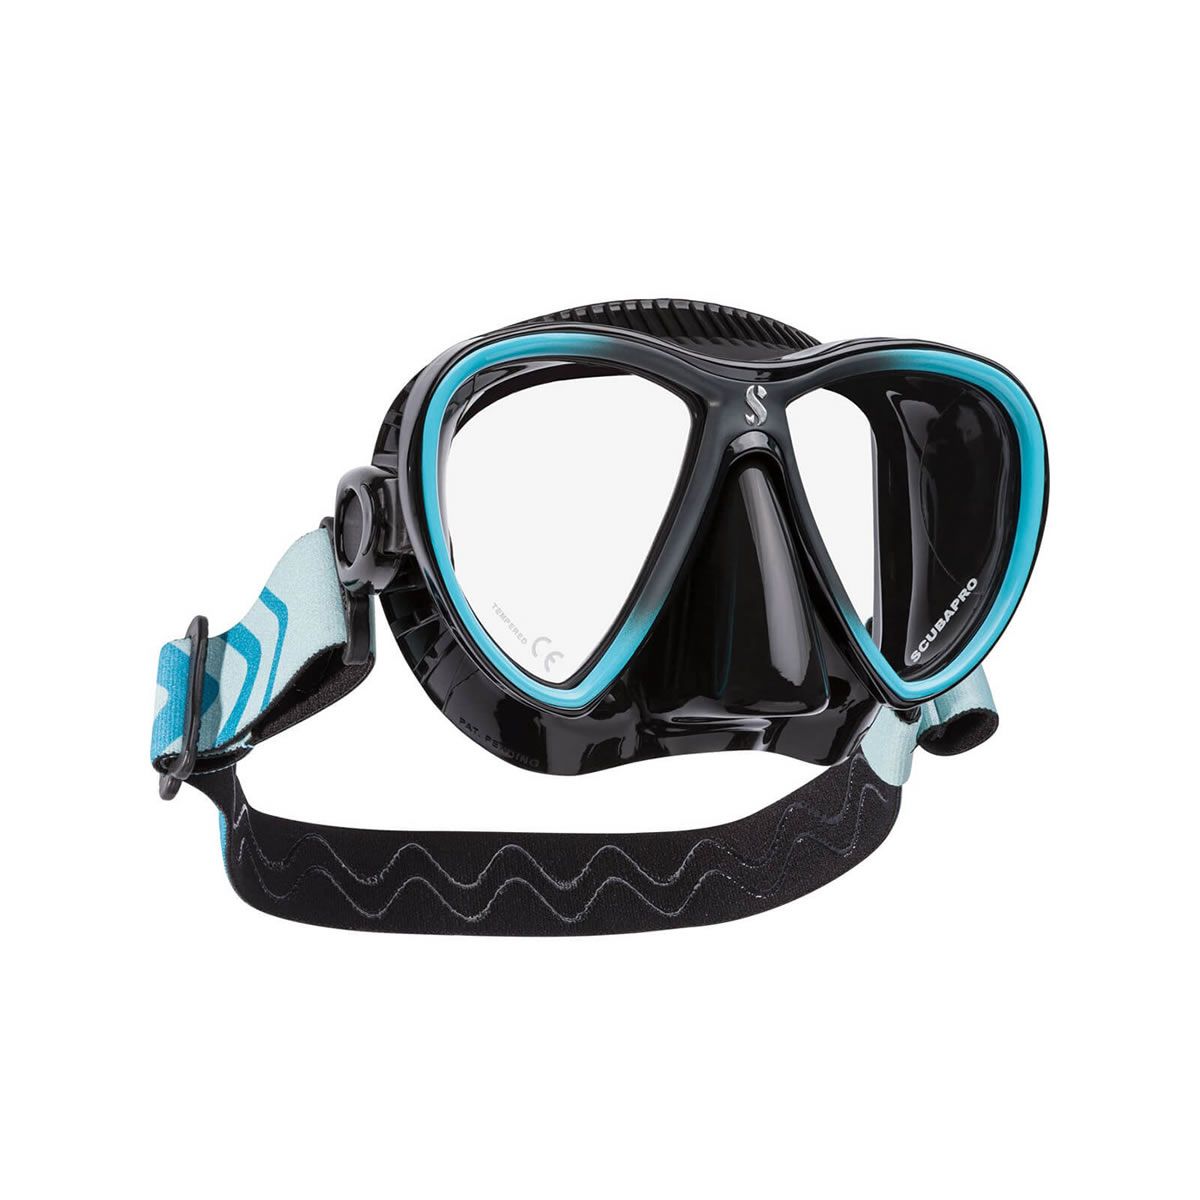 Scubapro Synergy 2 Trufit Diving Mask Blue